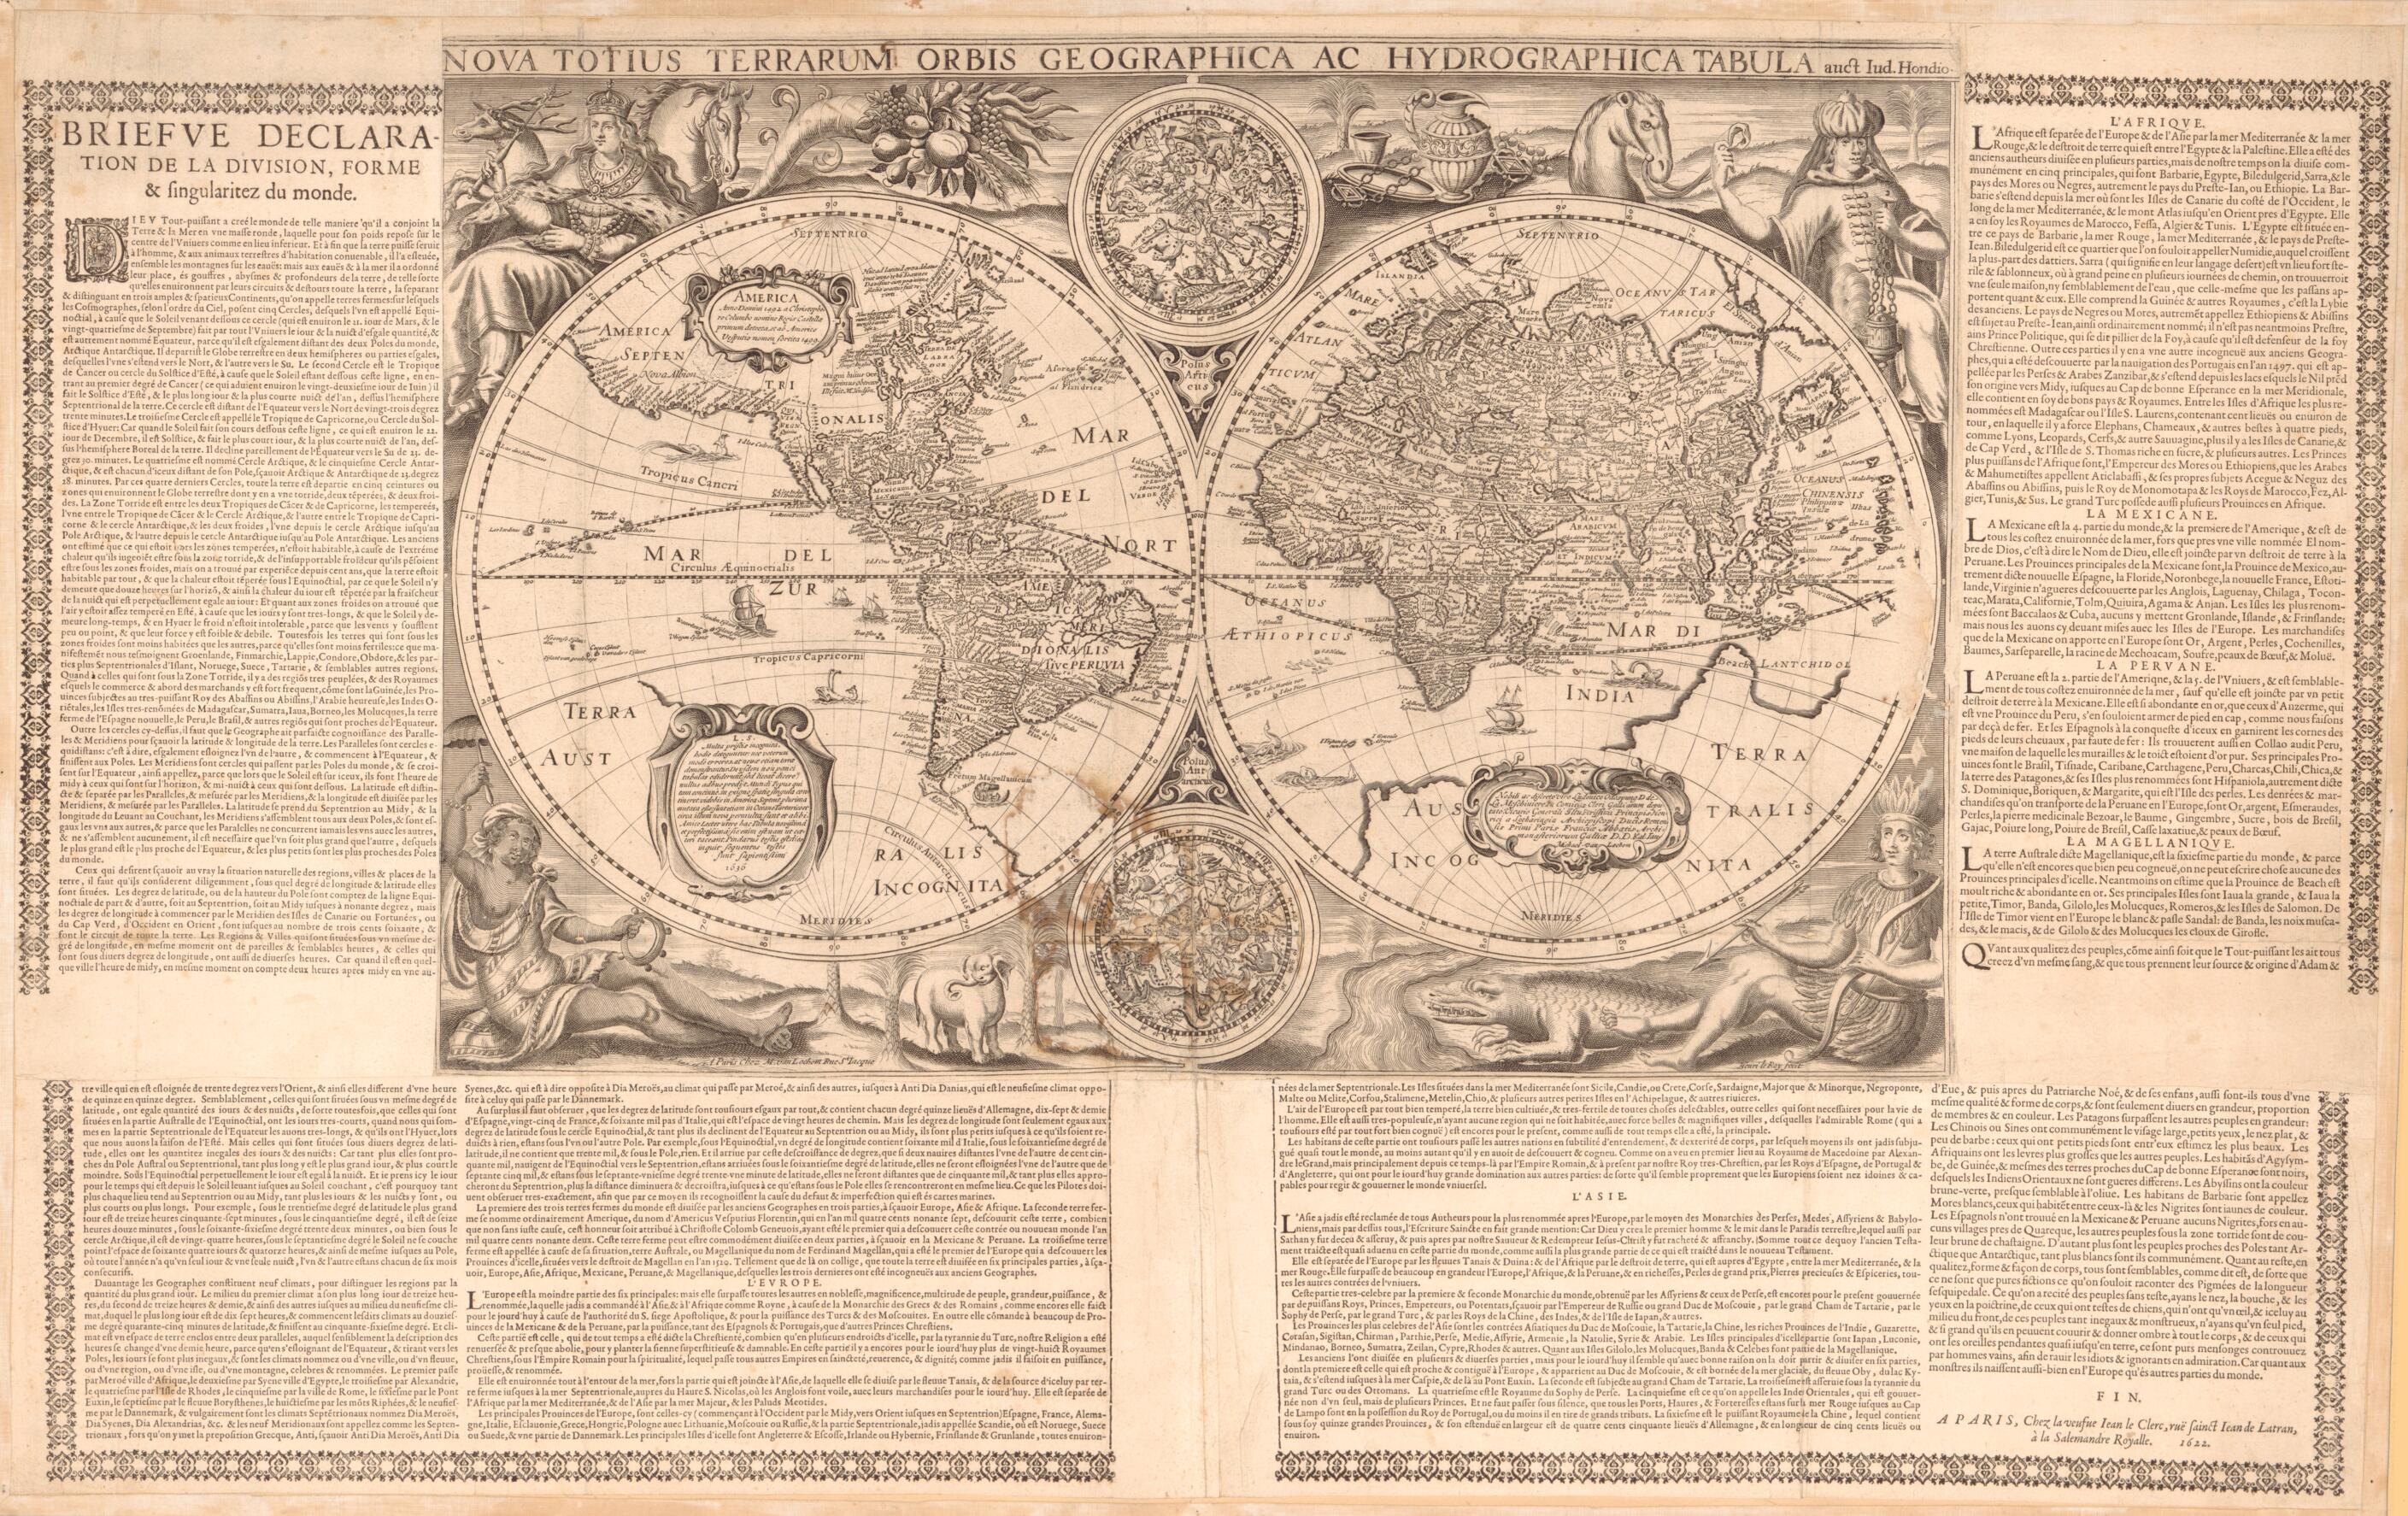 This old map of Nova Totius Terrarum Orbis Geographica Ac Hydrographica Tabula (Briefve Declaration De La Division, Forme &amp; Singularitez Du Monde) from 1636 was created by Jodocus Hondius, Jean Le Clerc, Henri Le Roy, Michel Van Lochom in 1636